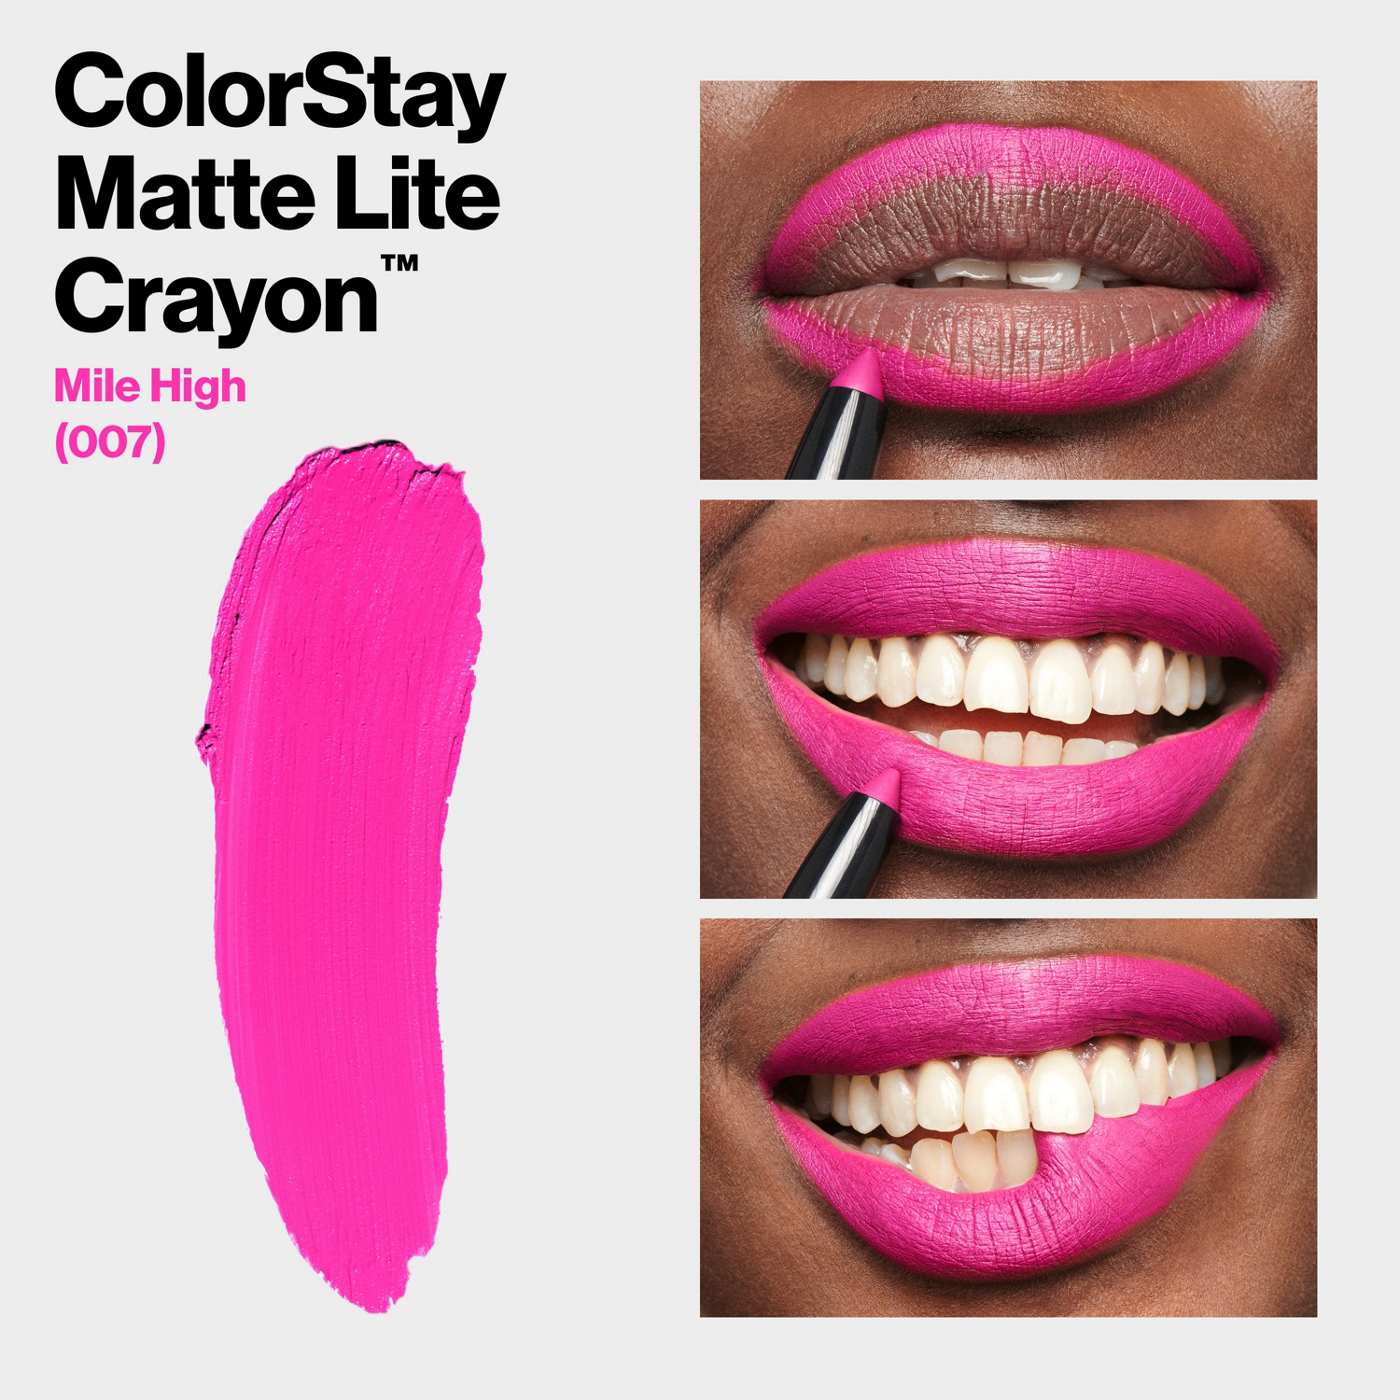 Revlon ColorStay Matte Lite Crayon Lipstick - Mile High; image 6 of 7